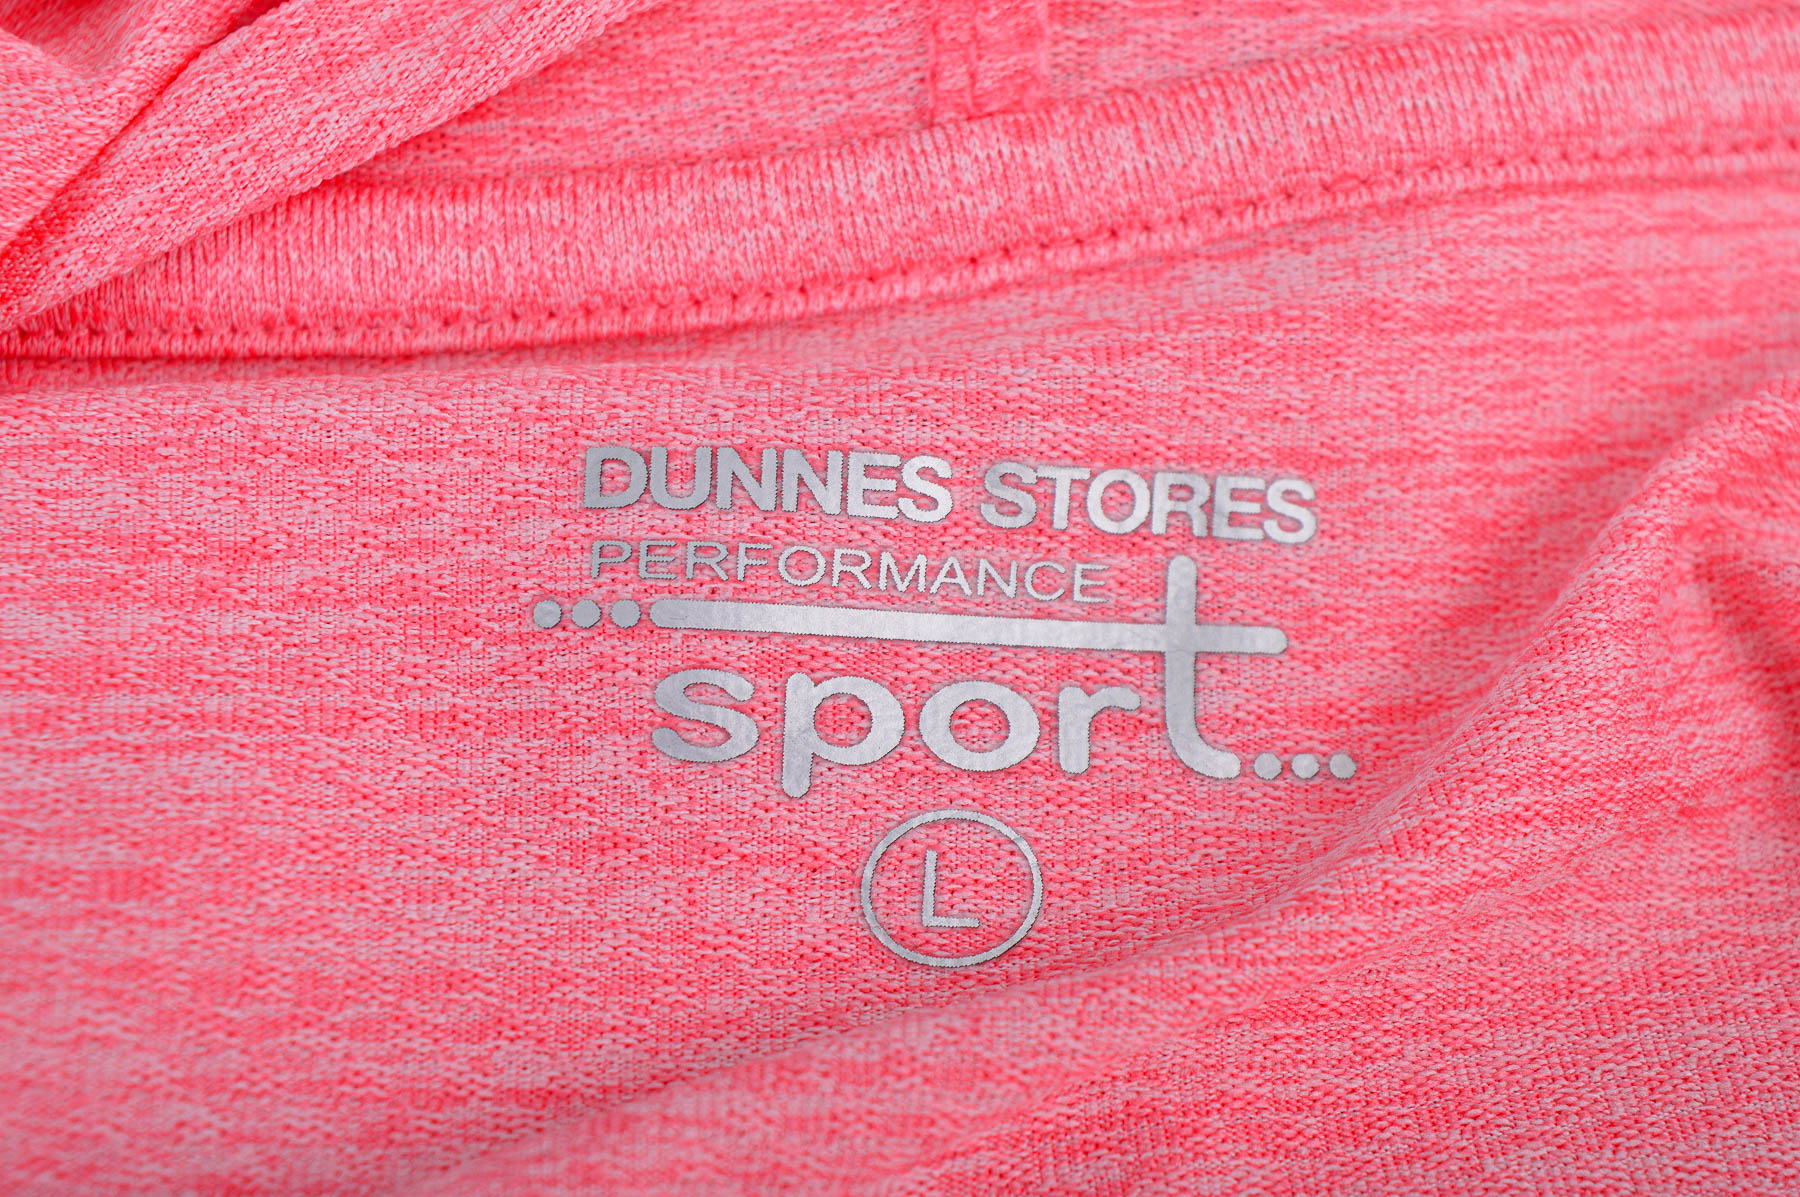 Damski top sportowy - Dunnes Stores - 2